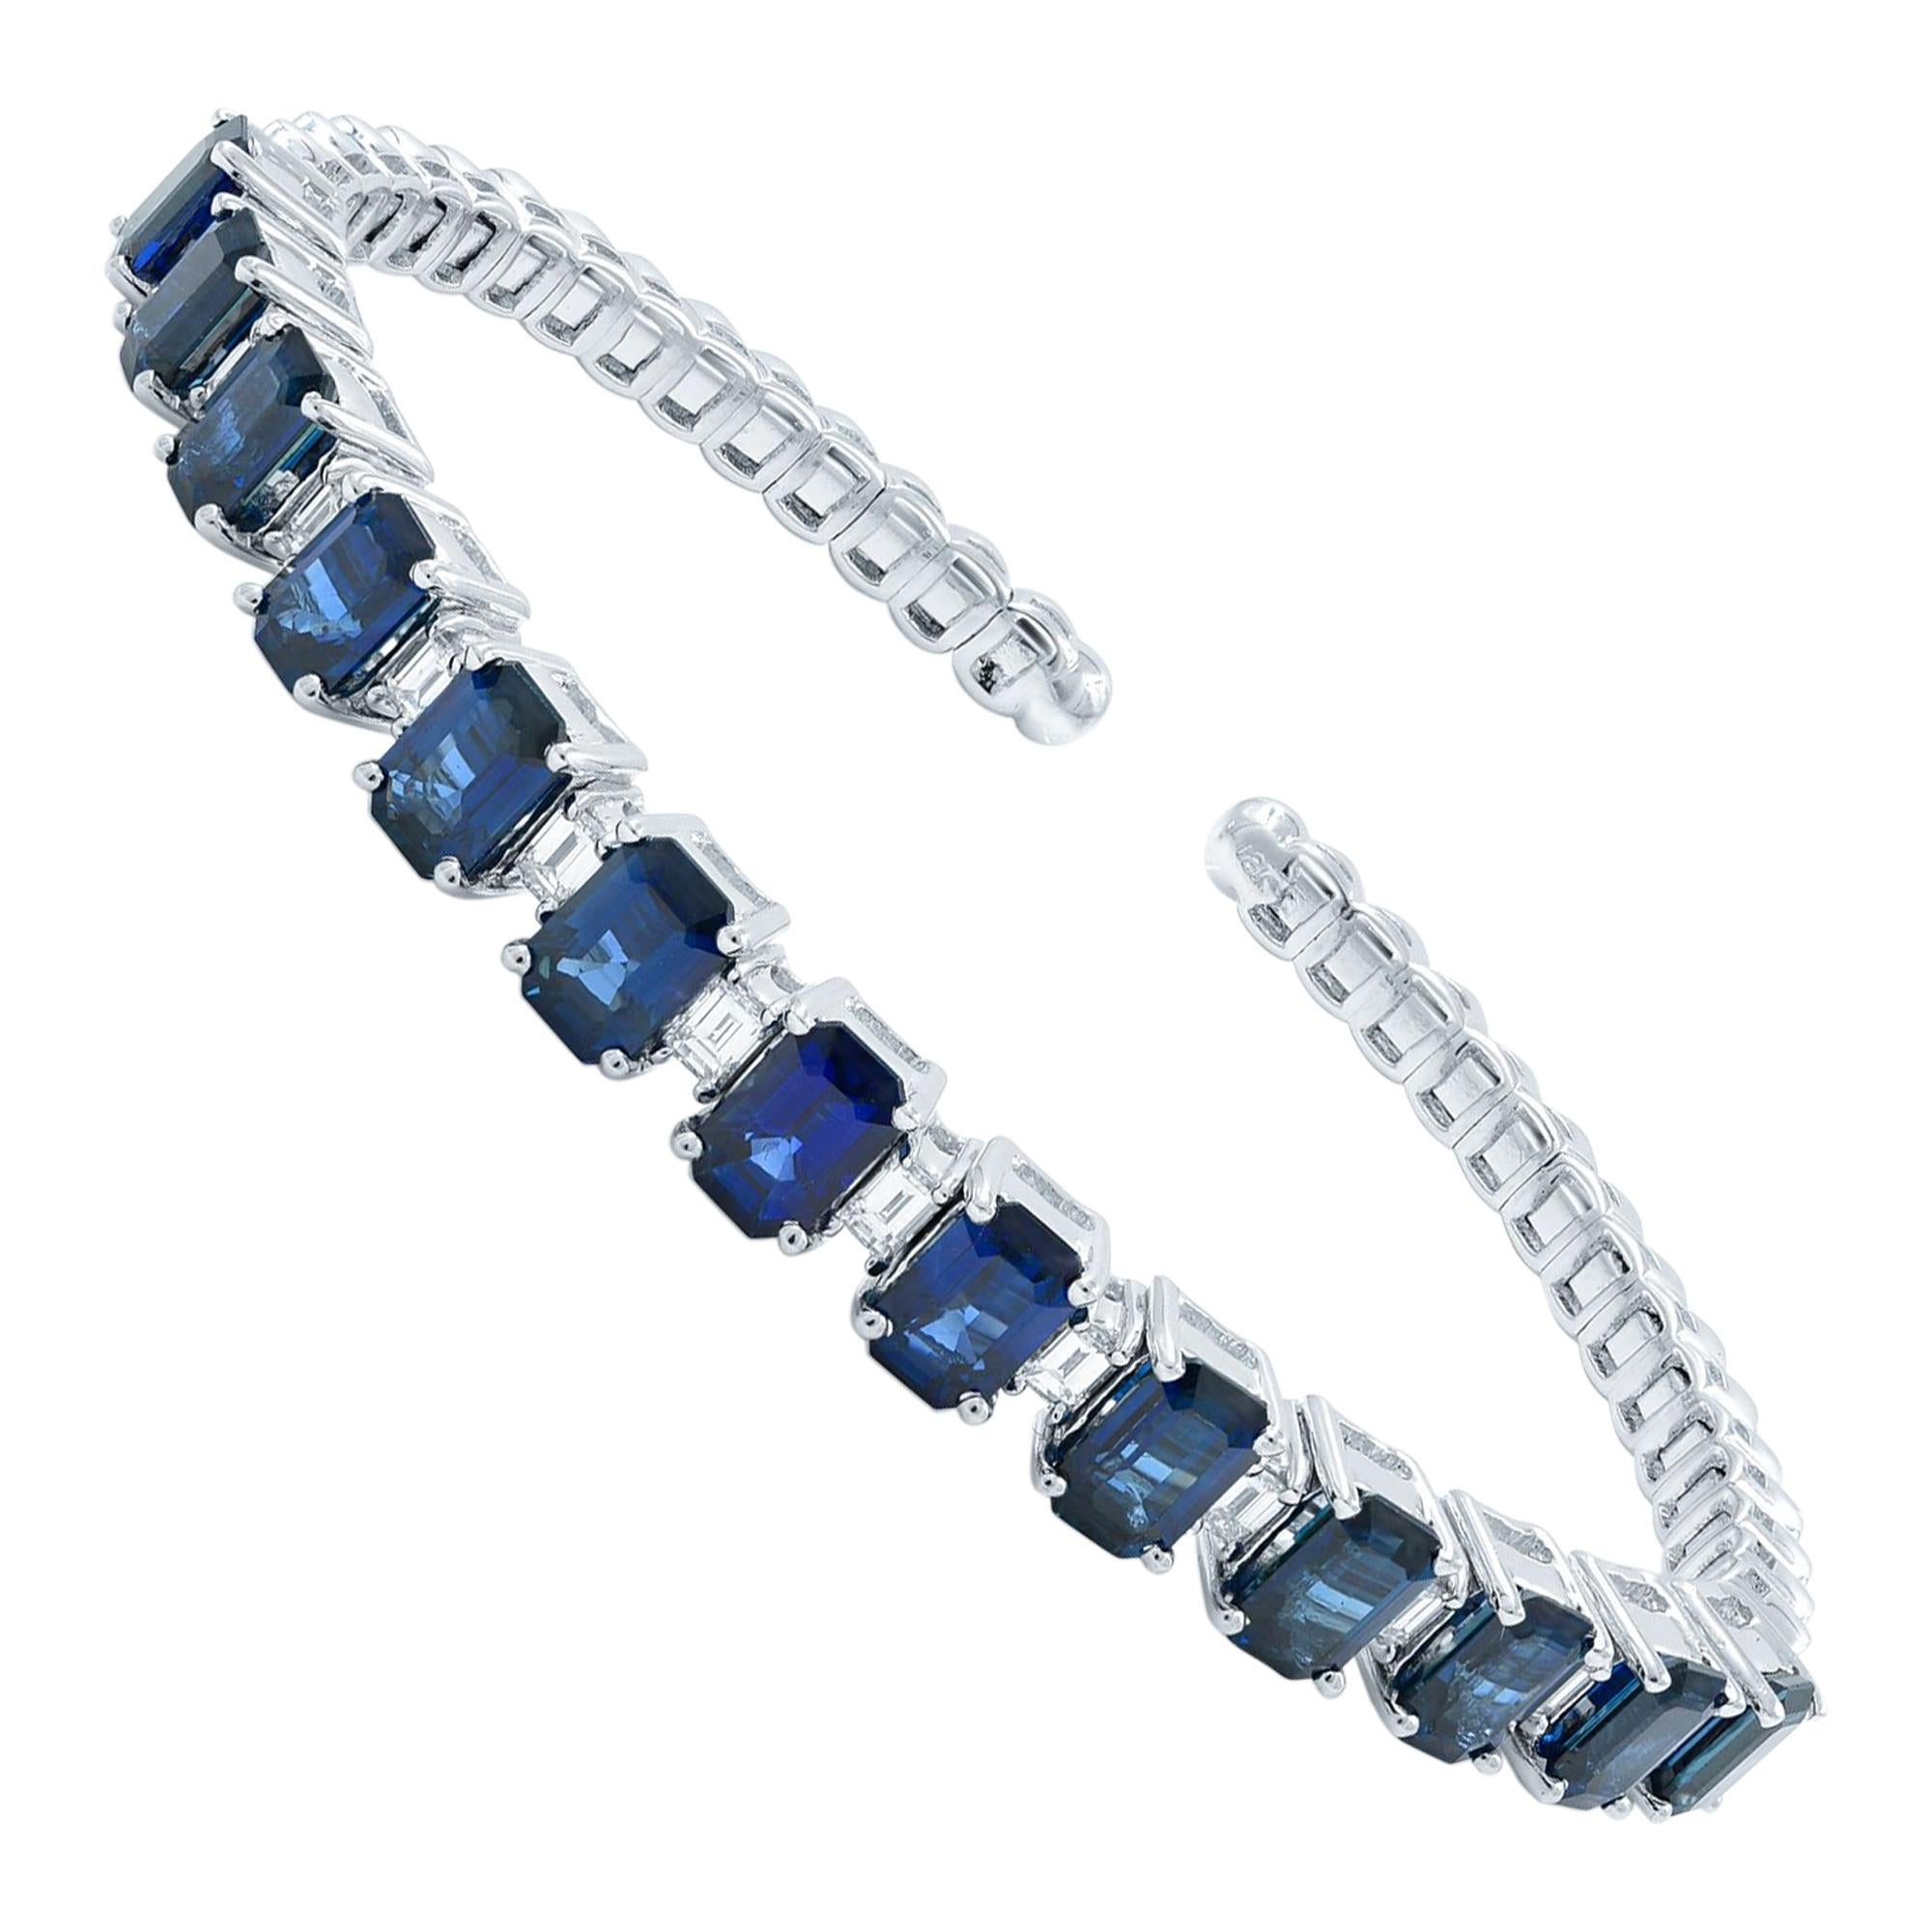 Blue Sapphire 10.20Cttw And Diamond 1.20Cttw Bangle Bracelet 18K White Gold  For Sale